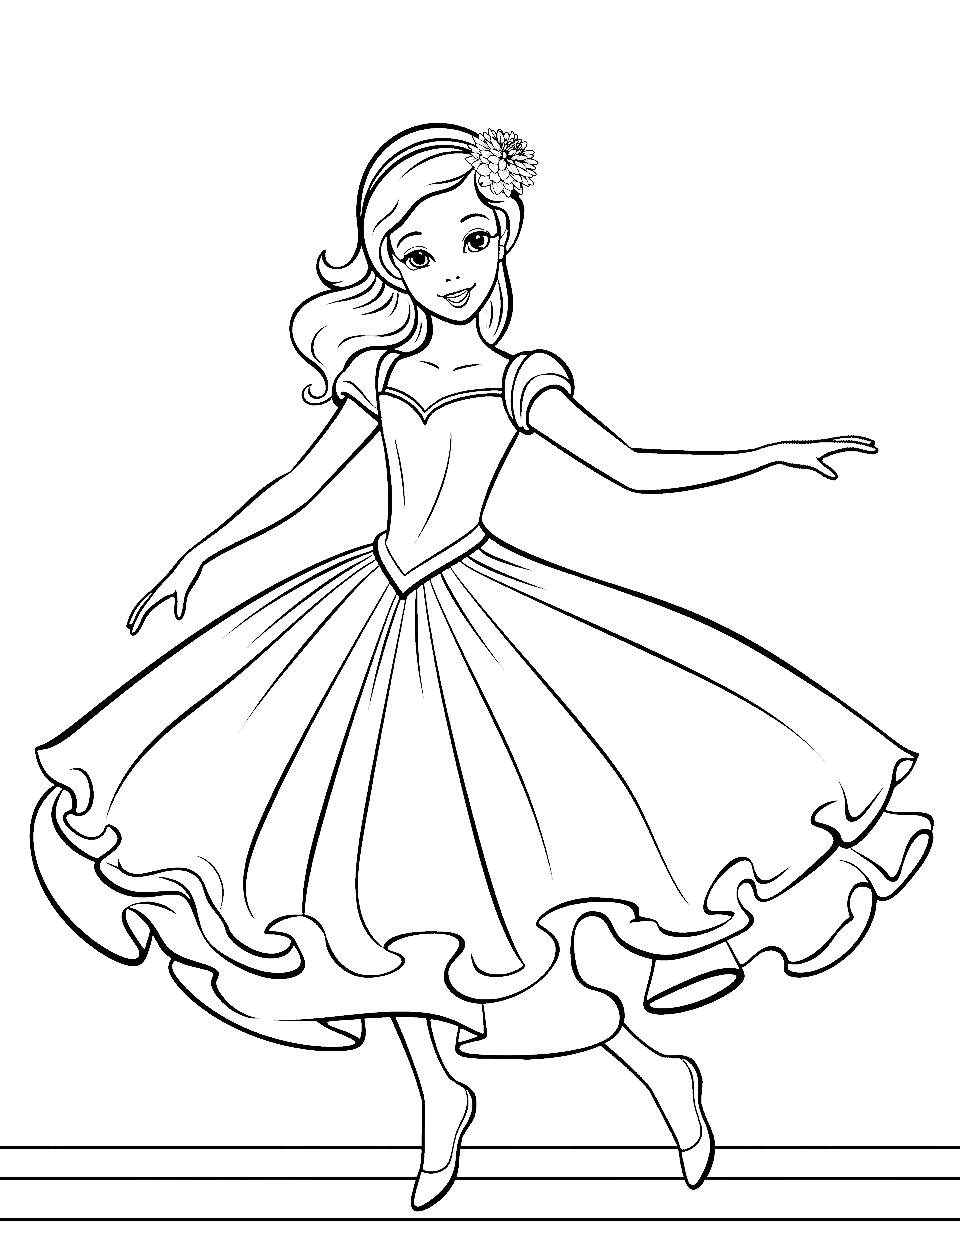 Sleeping Beauty Dance Ballerina Coloring Page - A scene from Sleeping Beauty with the ballerina in a beautiful dress.